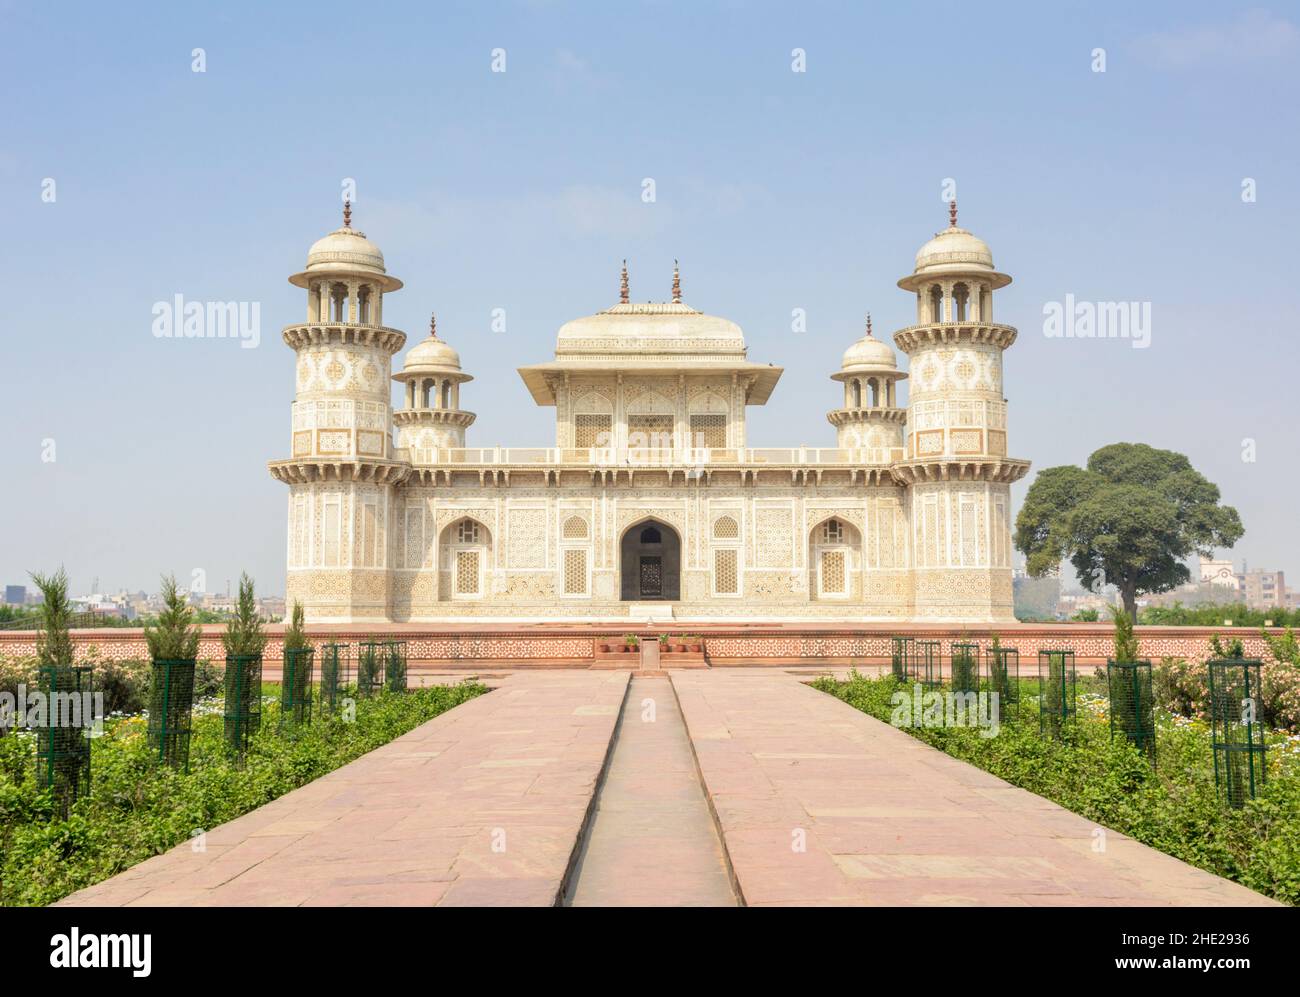 Tomb of Itmad-Ud-Daulah or Etimad-ud-Daulah made from white marble, Agra, Uttar Pradesh, India, South Asia. Also known as the Baby Taj or Mini Taj. Stock Photo